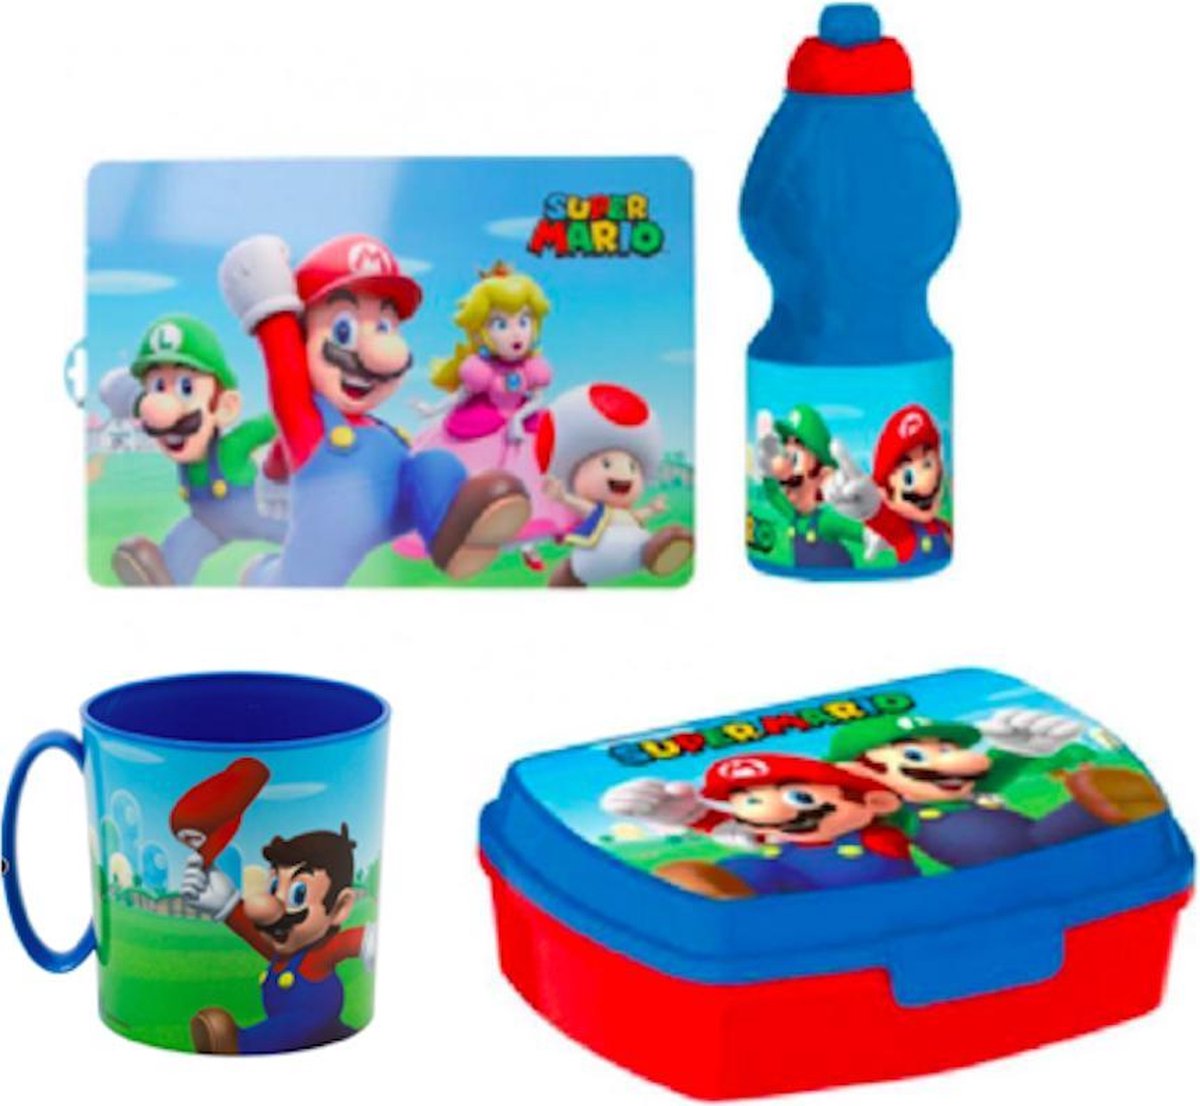 Mario brooddoos (17 cm - 13 cm - 6 cm) + drinkfles (18 cm hoog - 400 ml) + drinkbeker ( 350 ml) + Placemat ( 43 cm X 28 cm)